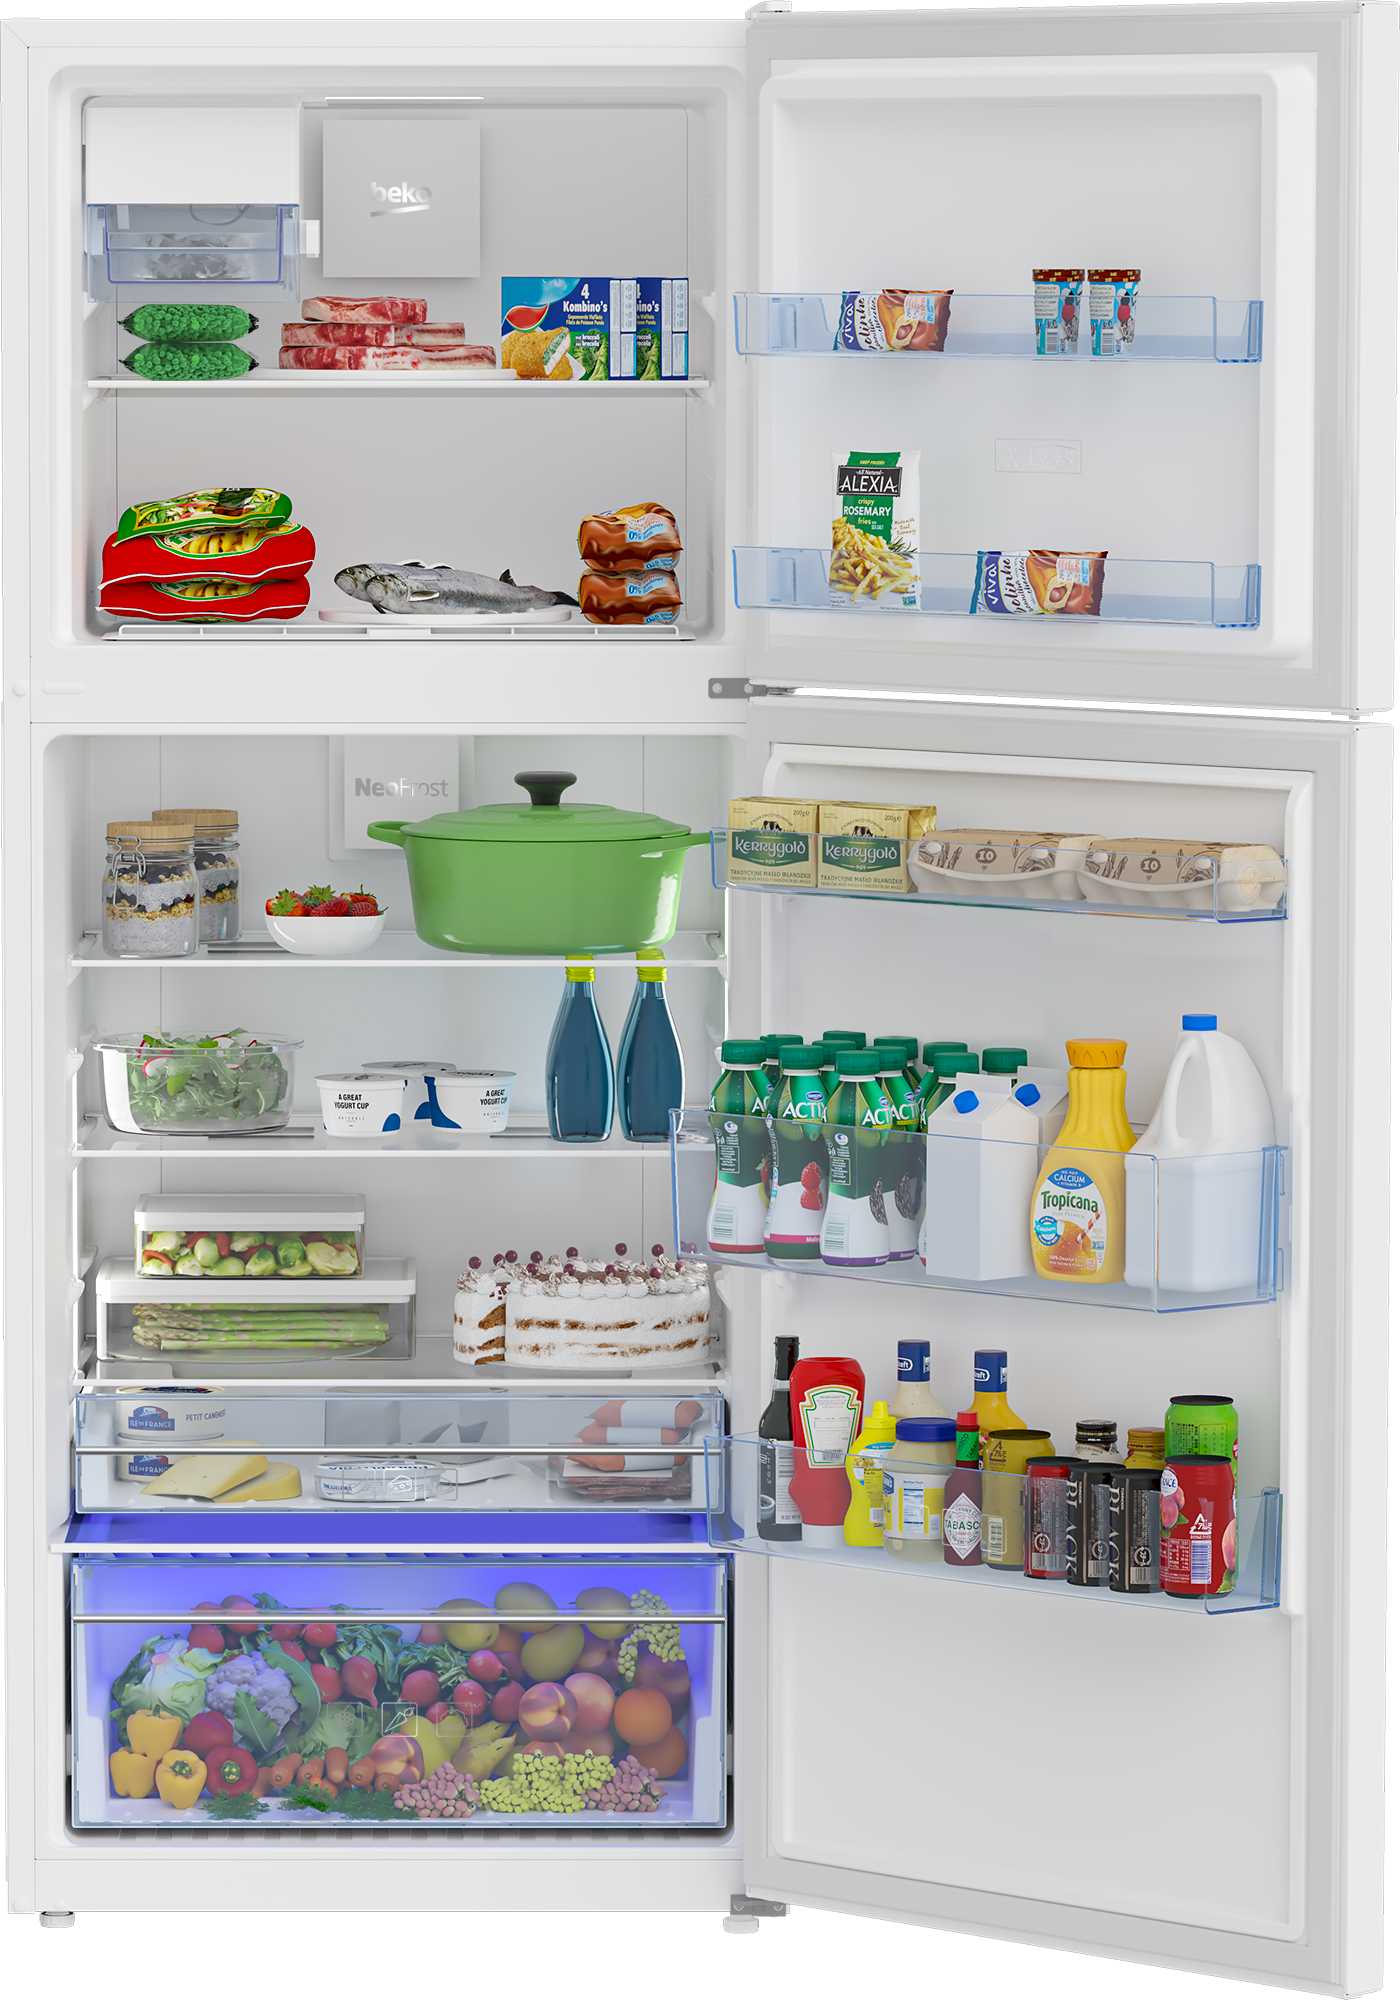 Beko BFTF2716WHIM 28 Freezer Top White Refrigerator with Auto Ice Maker